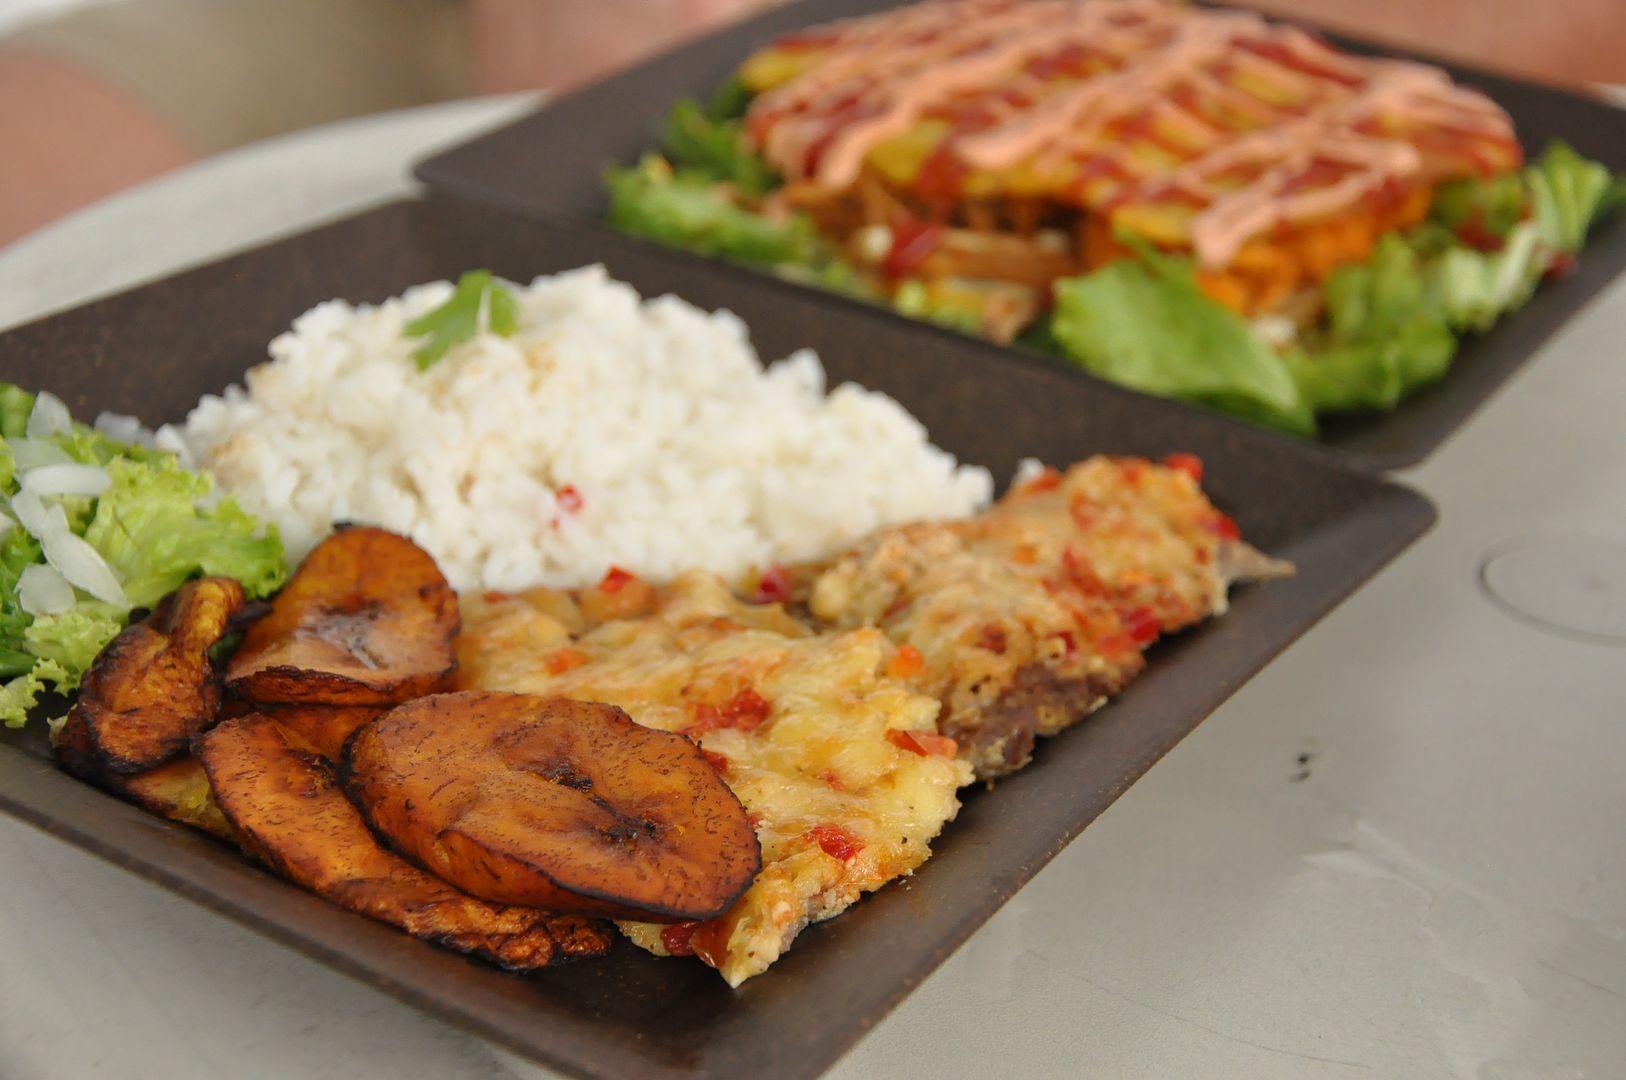 Kaxapa Factory - Un plato fuerte with aracherra, rice and plantains